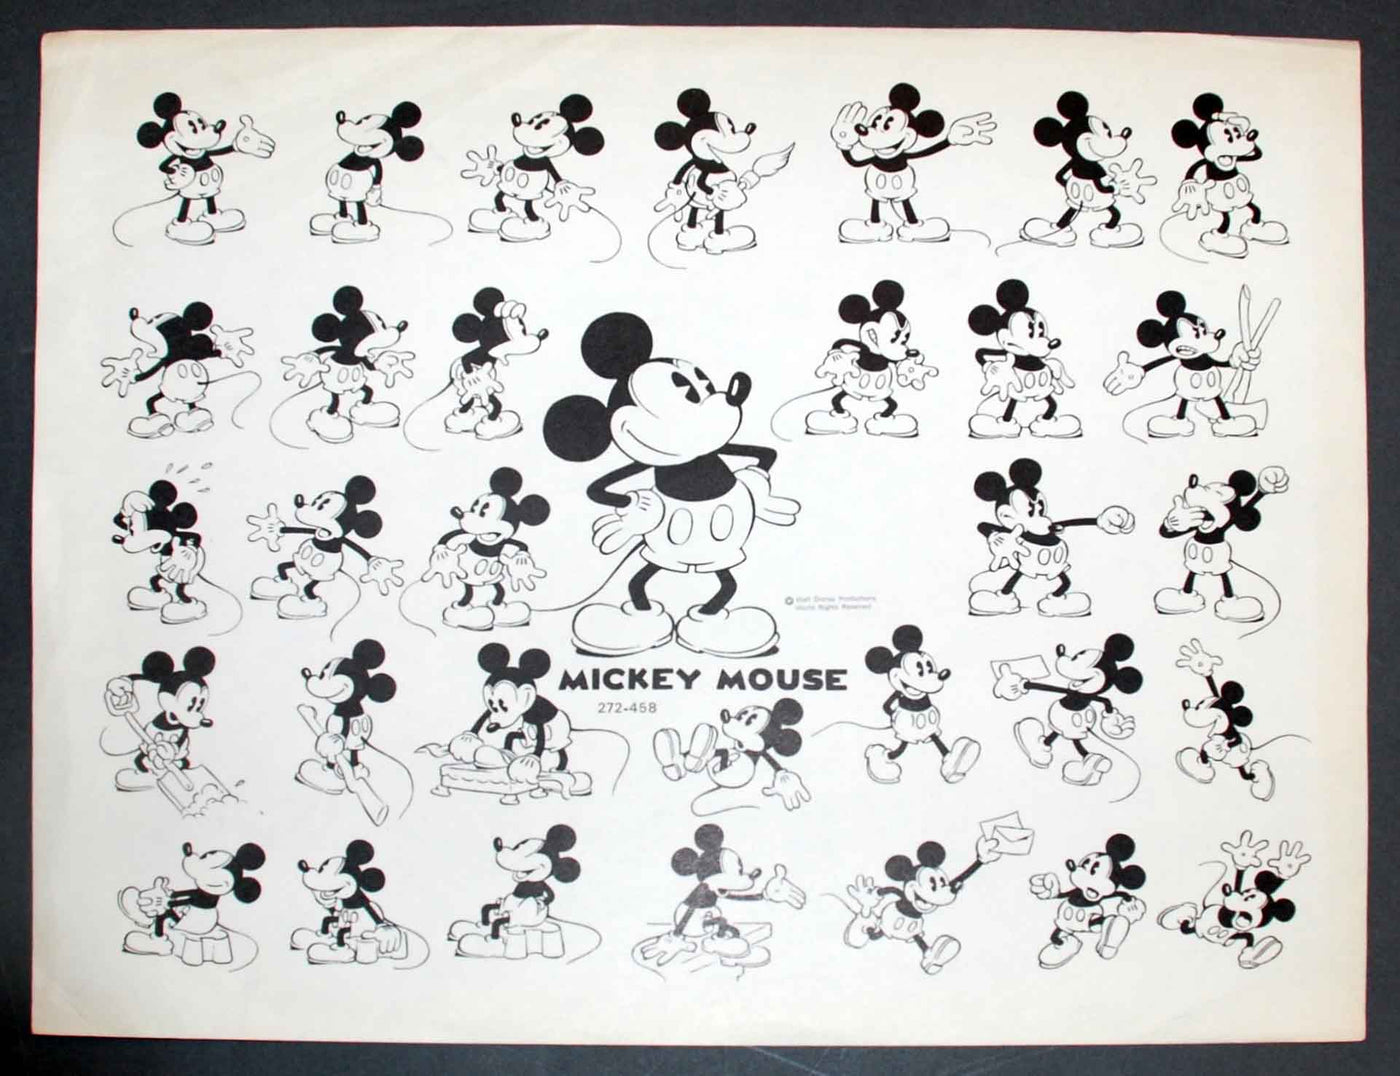 Original Walt Disney Model Sheet featuring Mickey Mouse